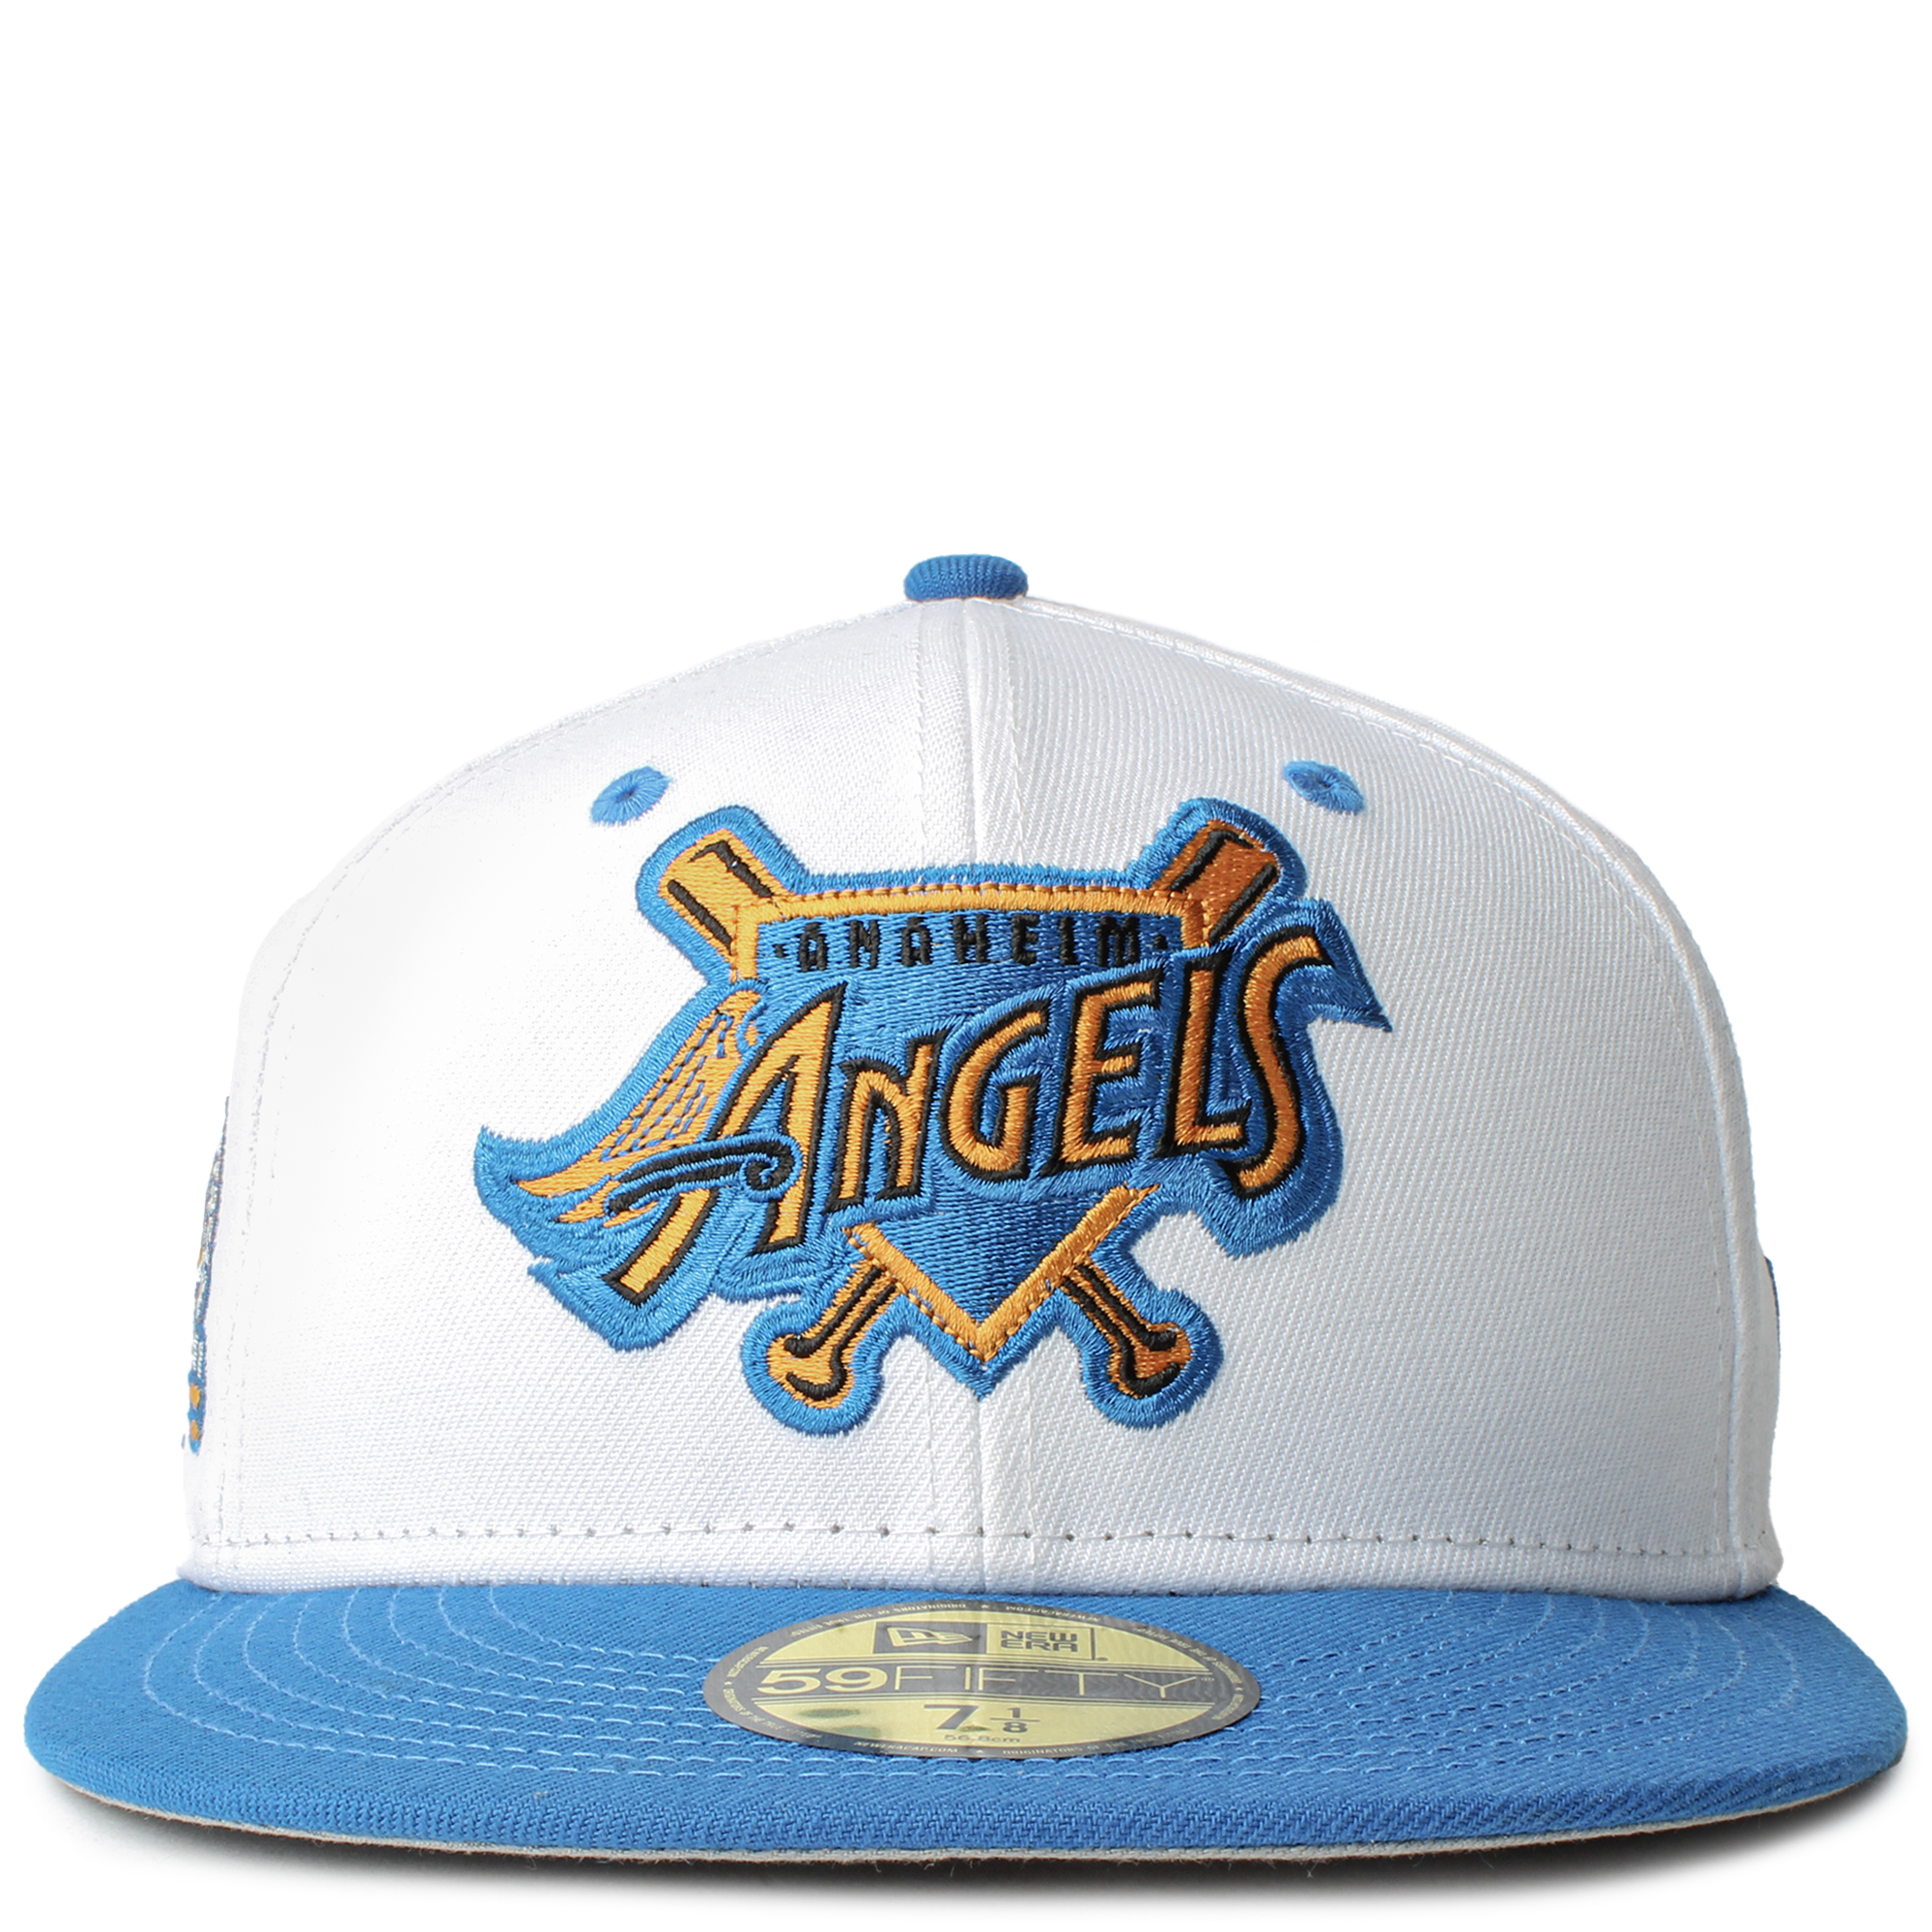 Official Los Angeles Angels Hats, Angels Cap, Angels Hats, Beanies